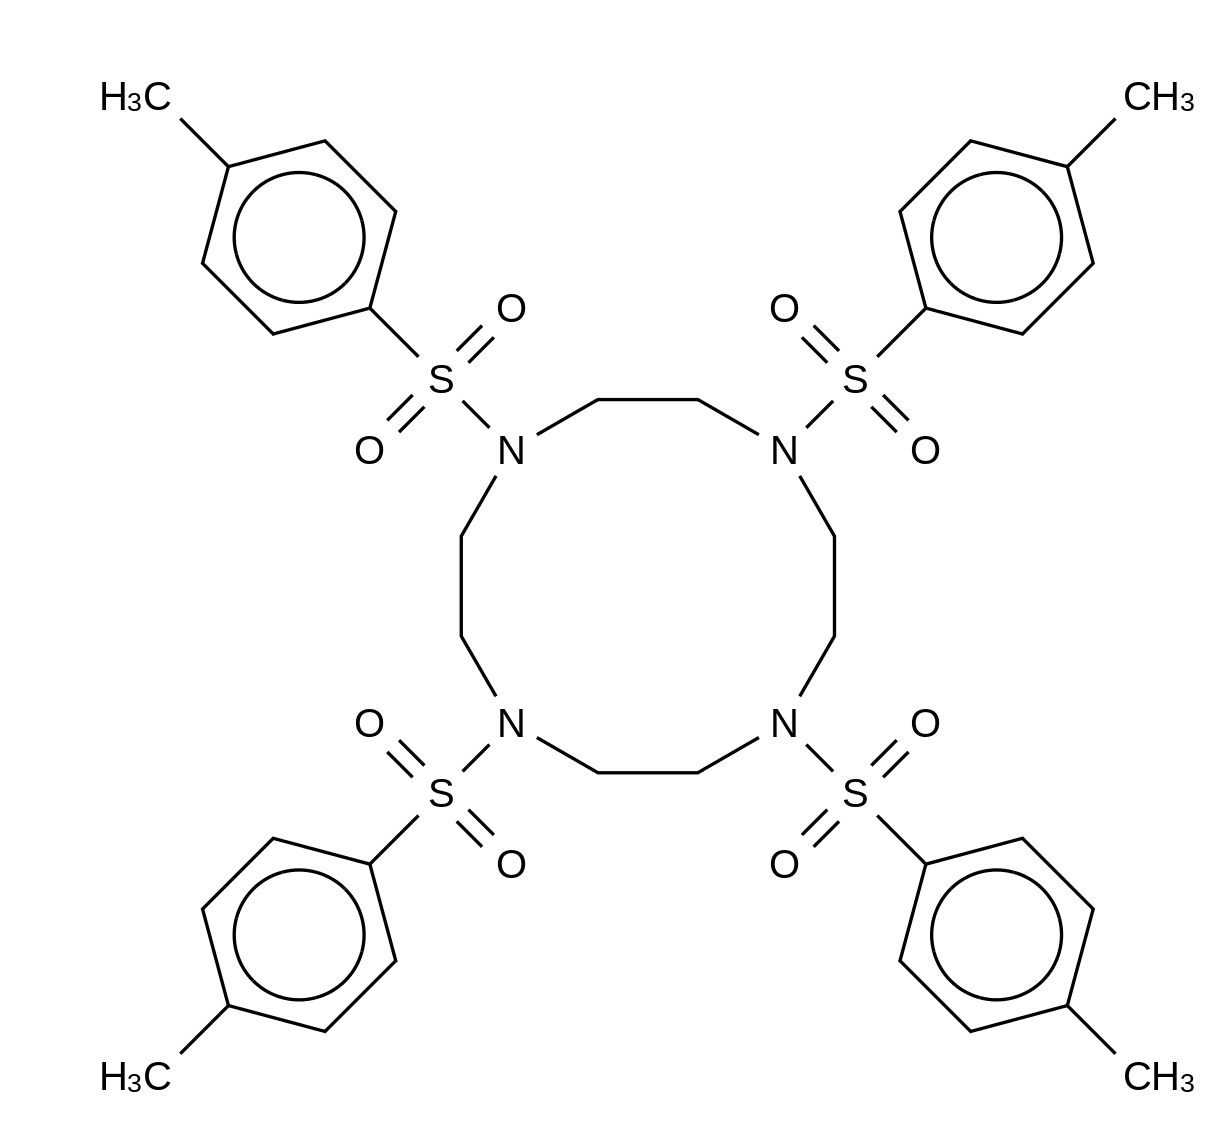 1,4,7,10-Tetratosyl-1,4,7,10-tetraazacyclododecane